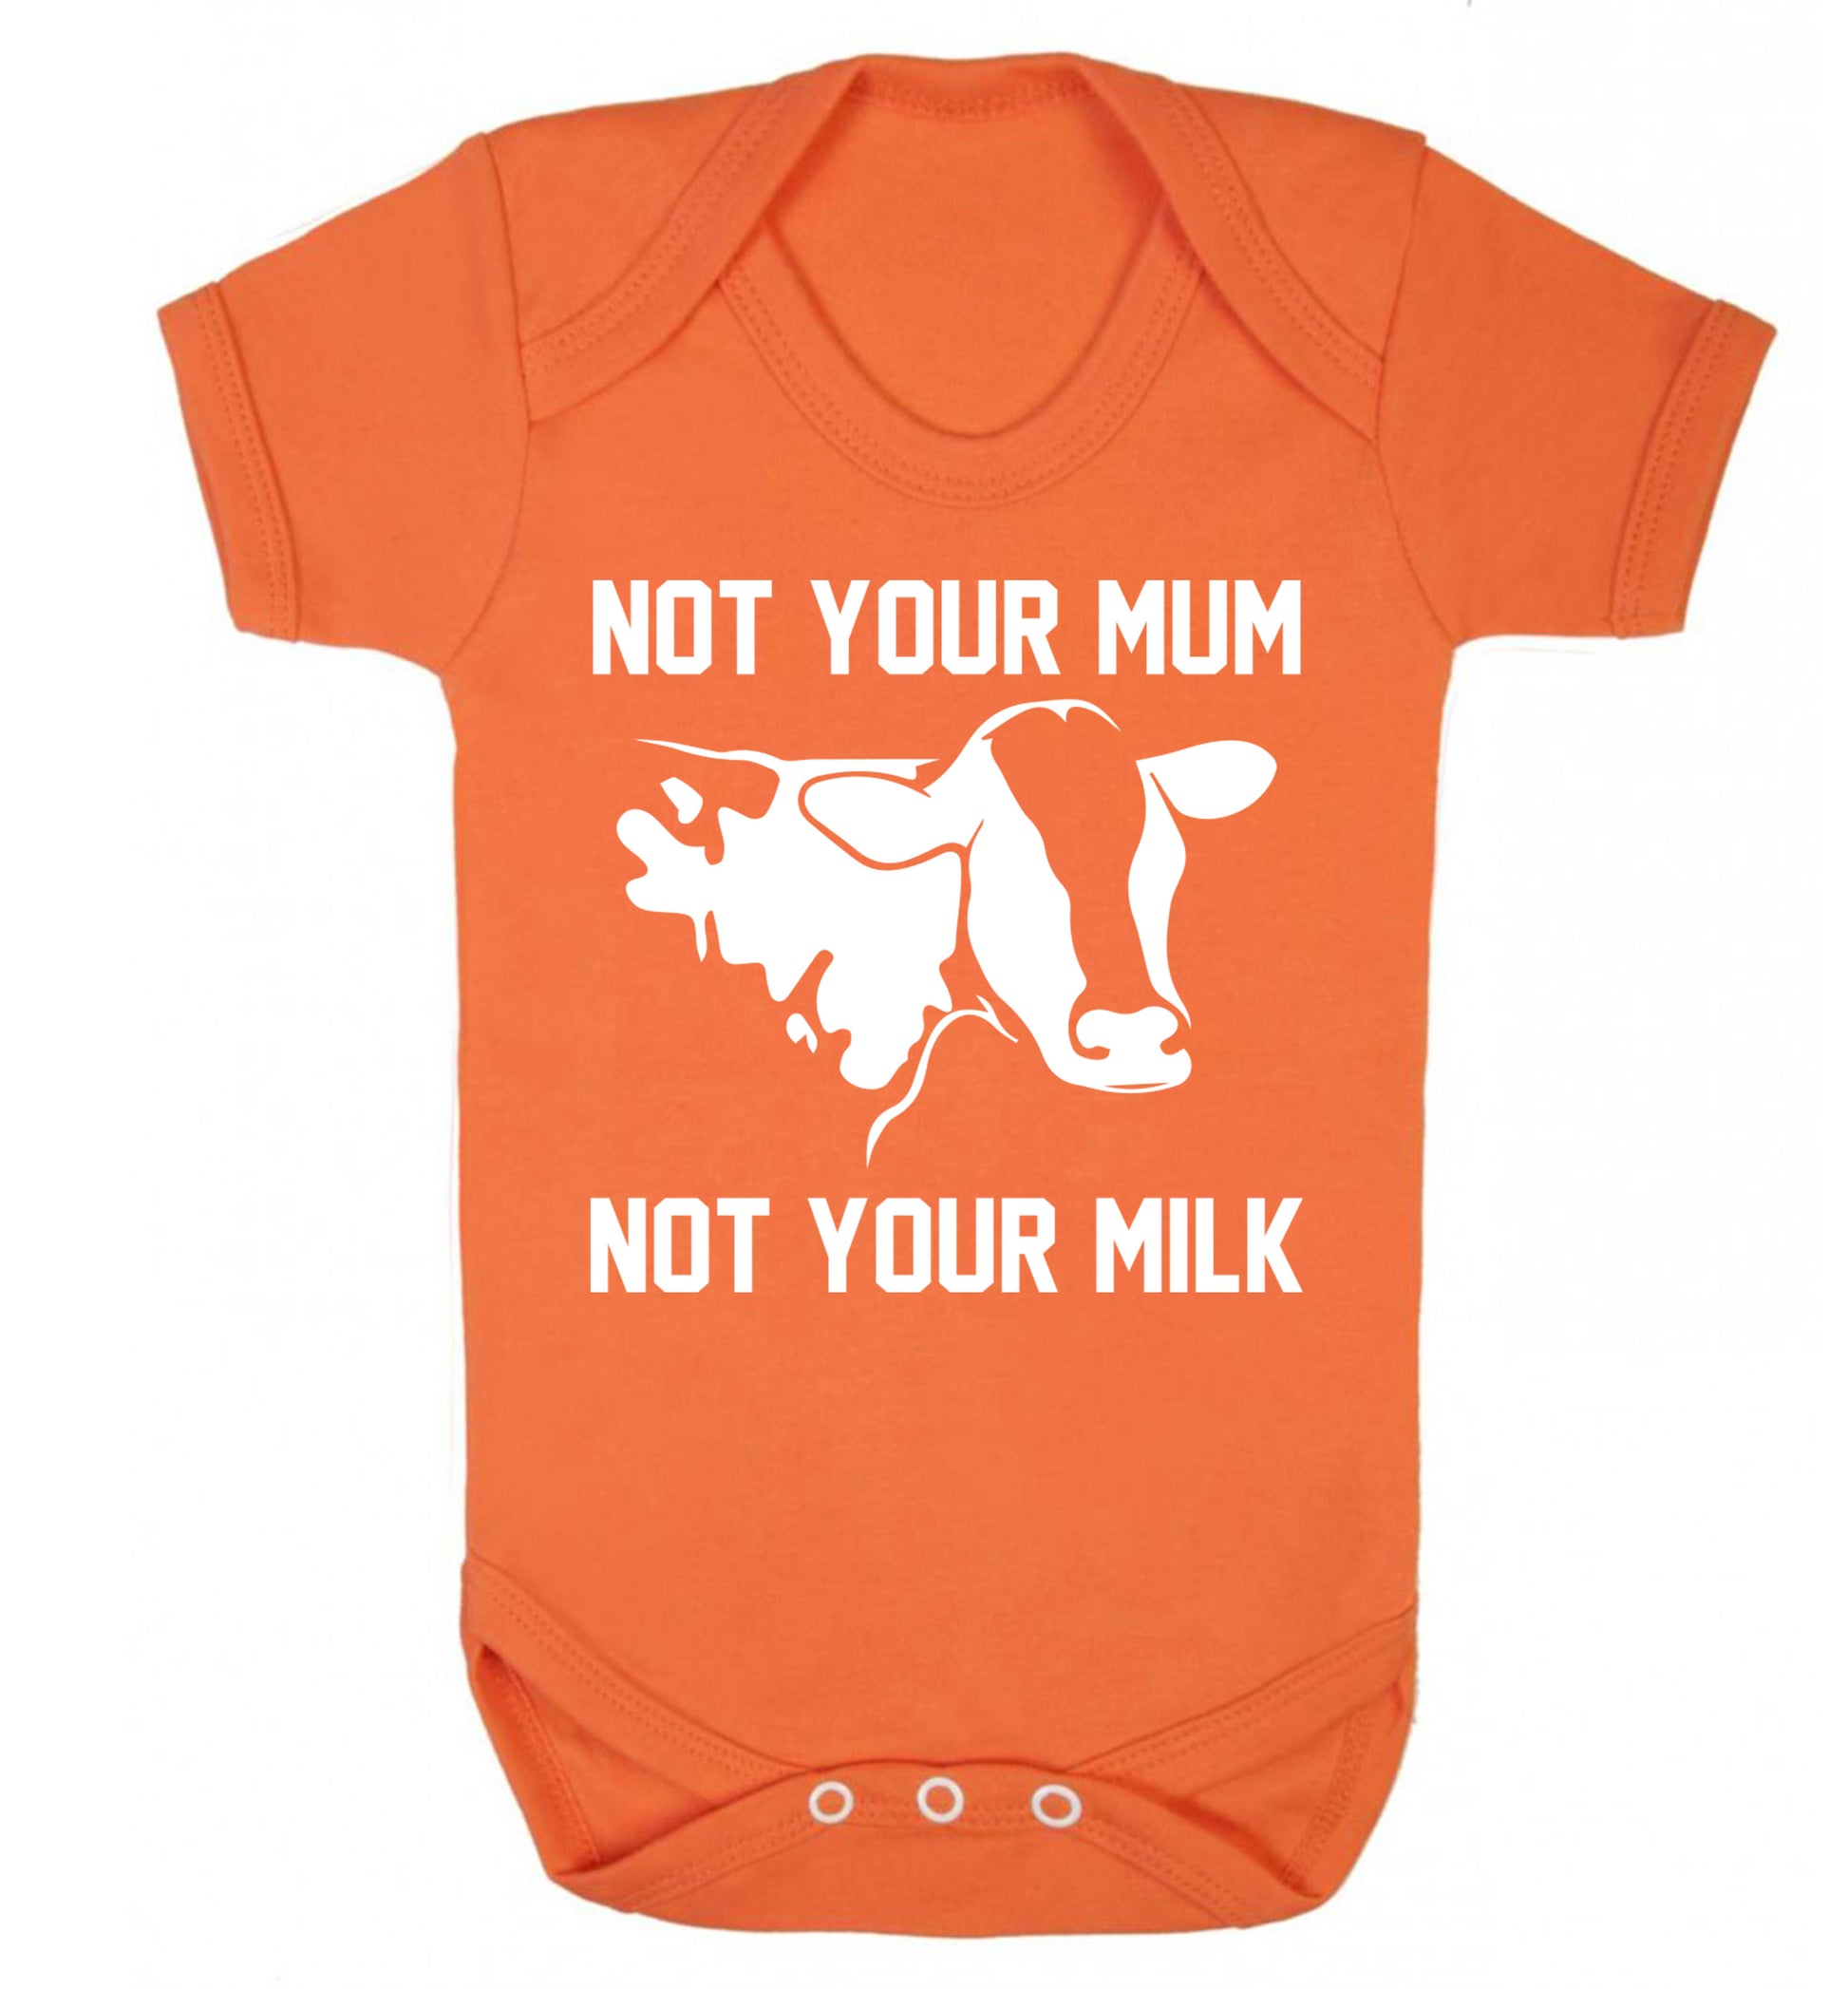 Not your mum not your milk Baby Vest orange 18-24 months